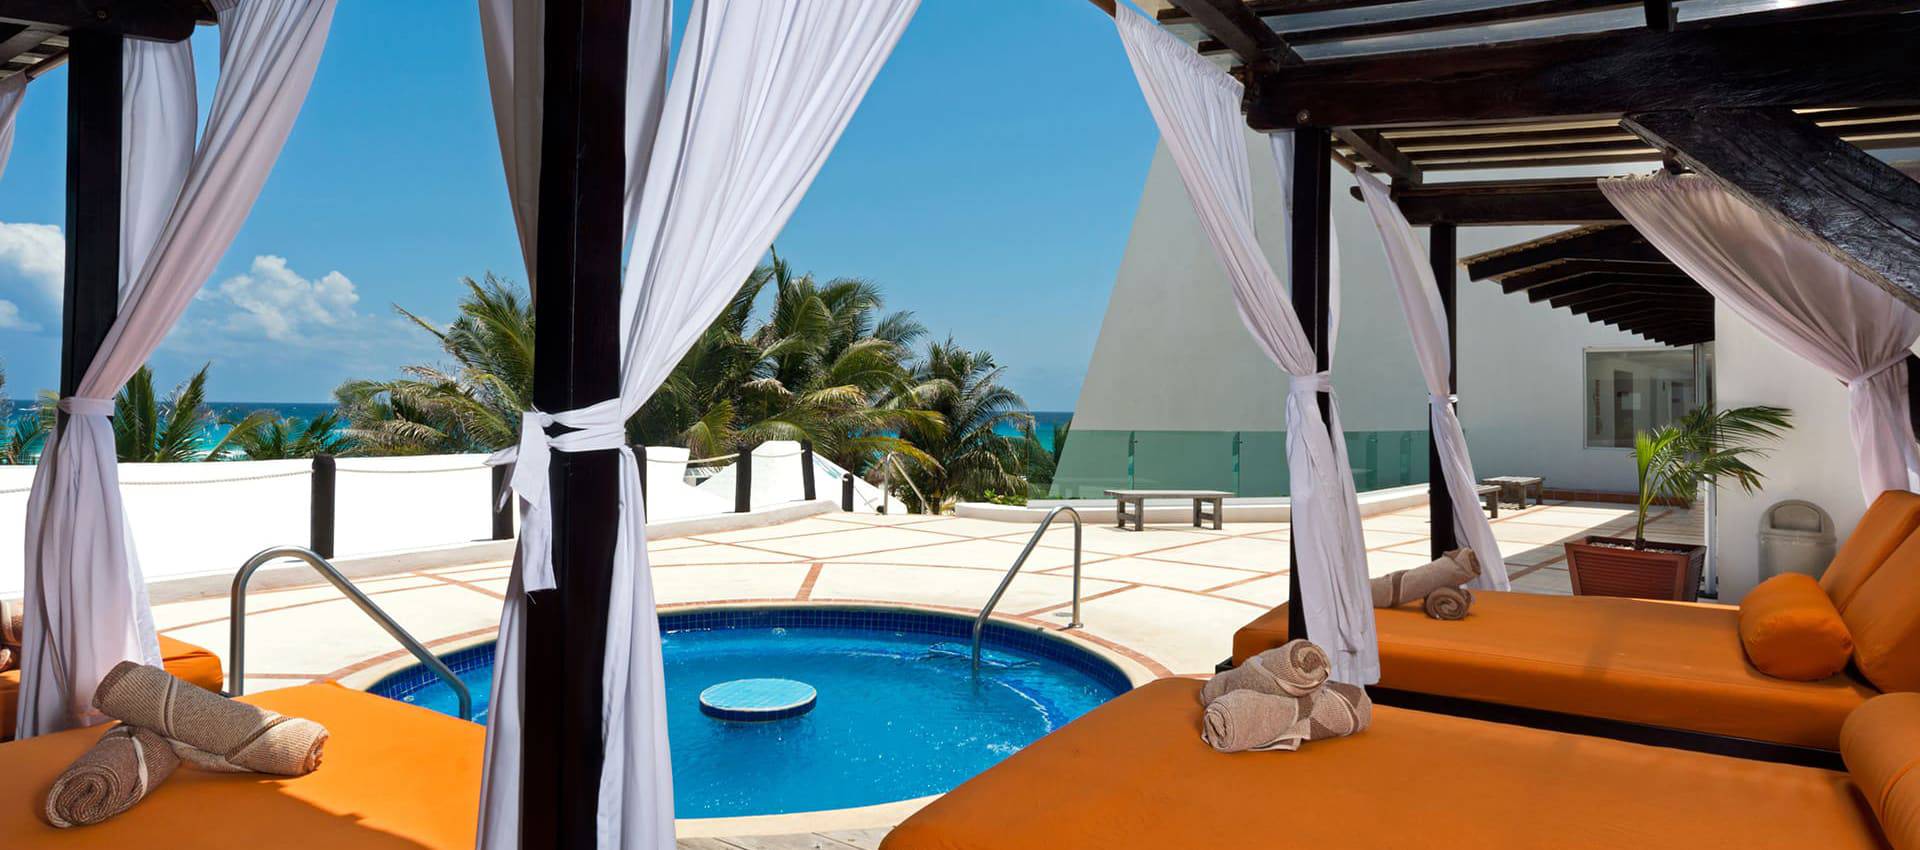  Hotel Flamingo Cancun Resort Cancún